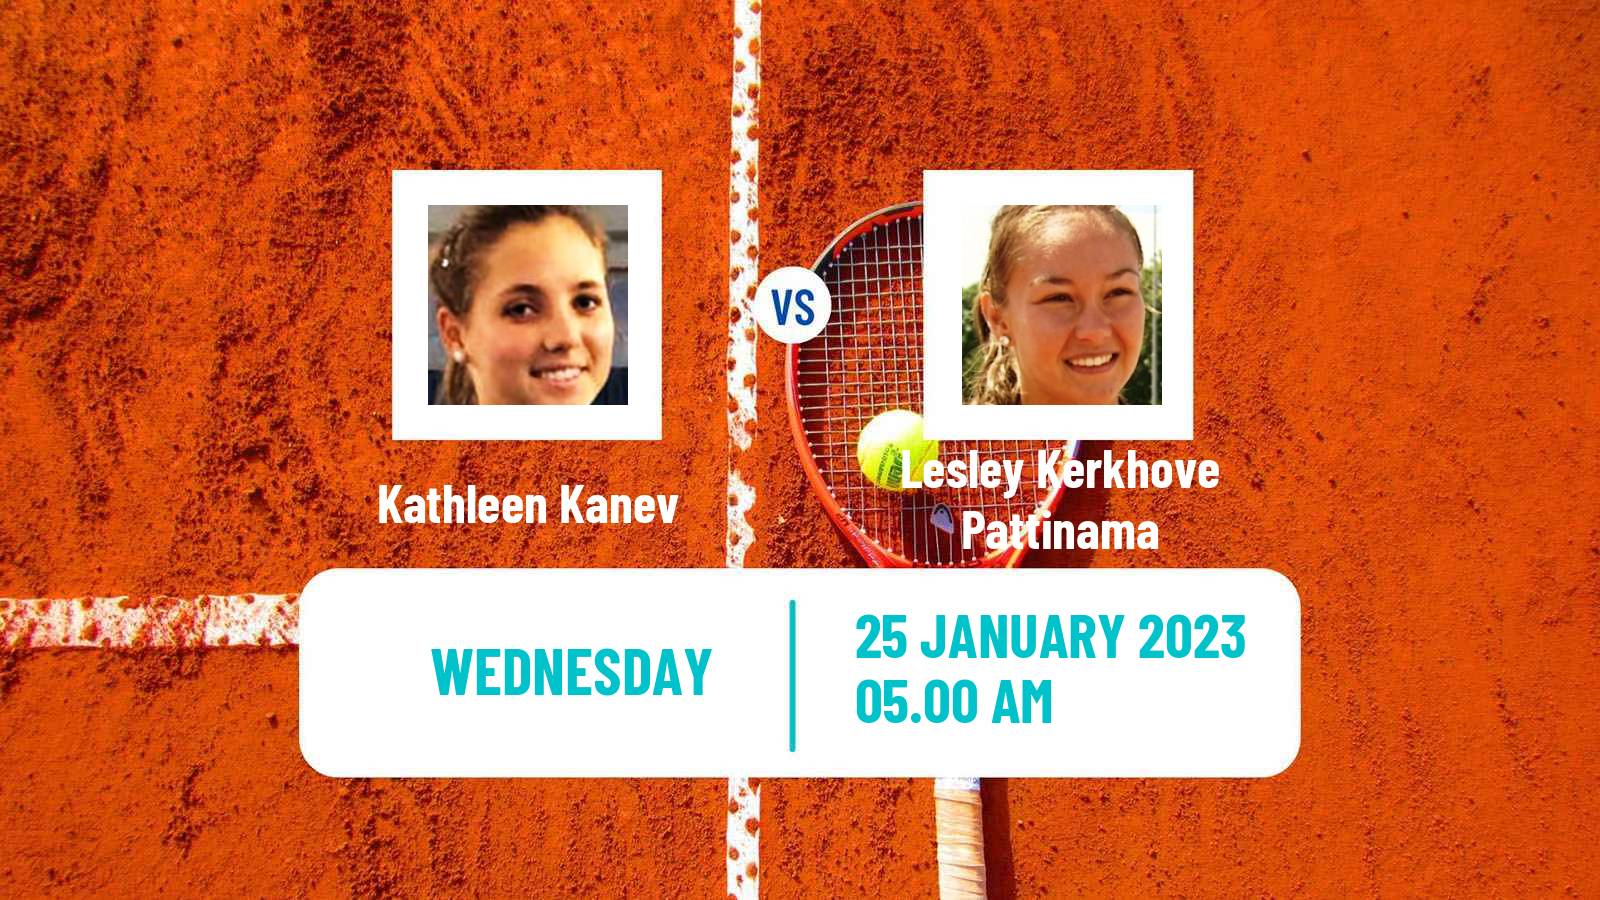 Tennis ITF Tournaments Kathleen Kanev - Lesley Kerkhove Pattinama